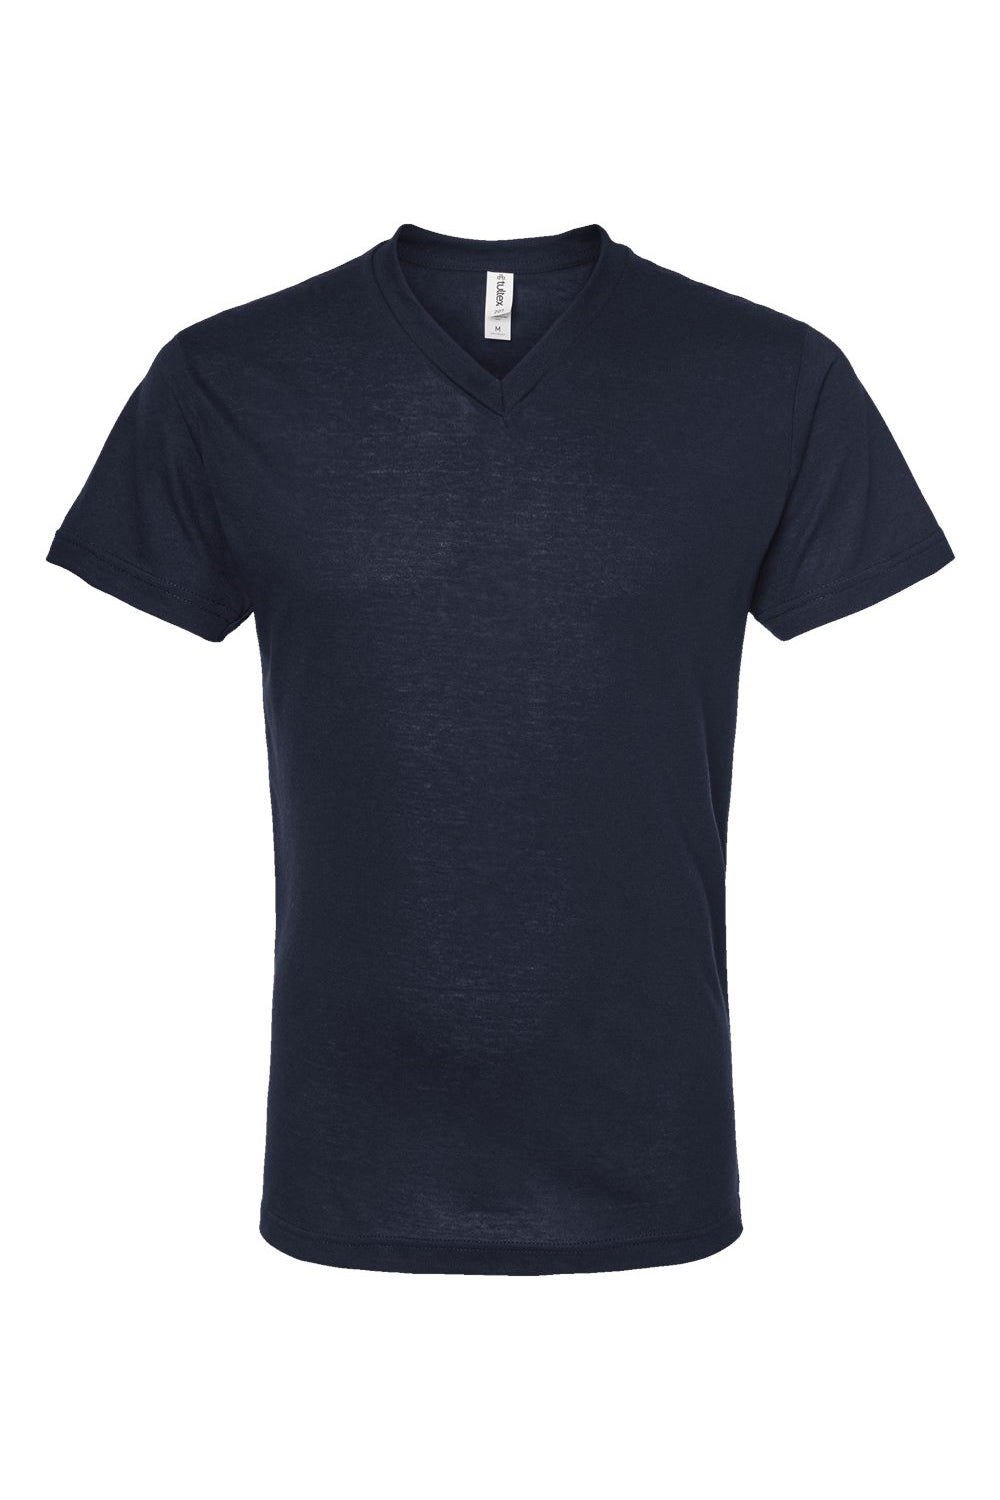 Tultex 207 Mens Poly-Rich Short Sleeve V-Neck T-Shirt Navy Blue Flat Front